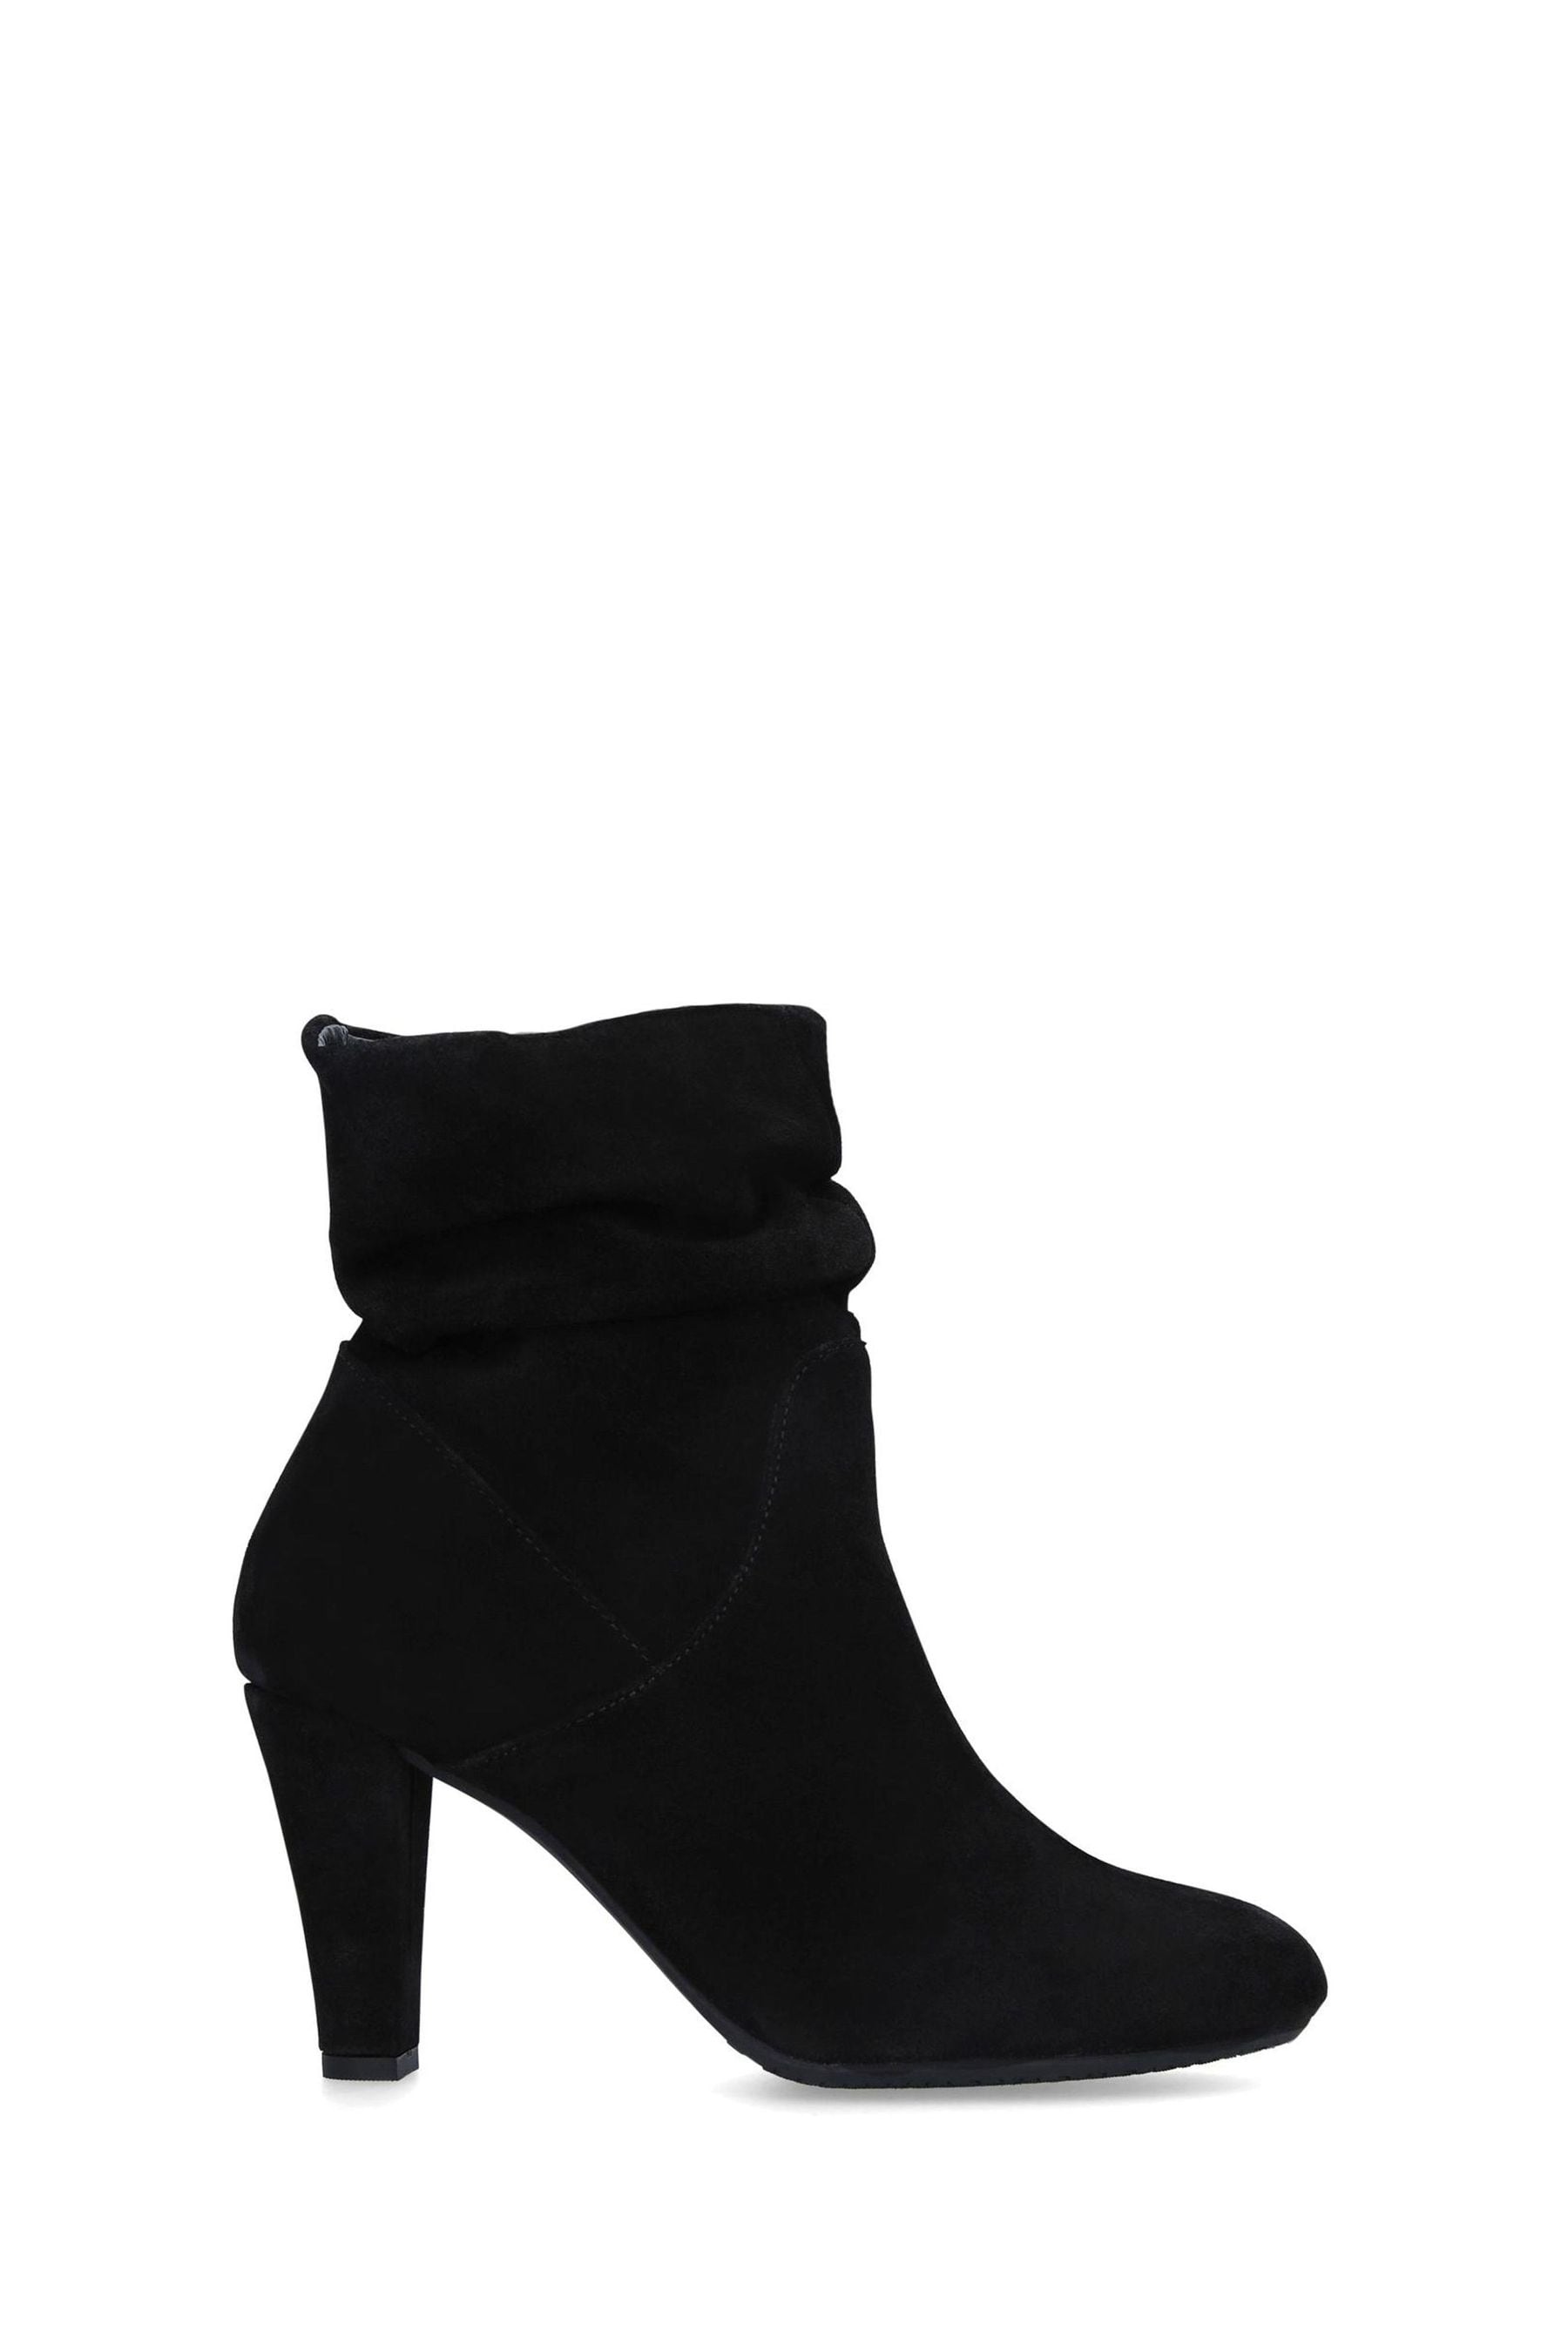 Buy Carvela Black Comfort Rita Boots from the Next UK online shop